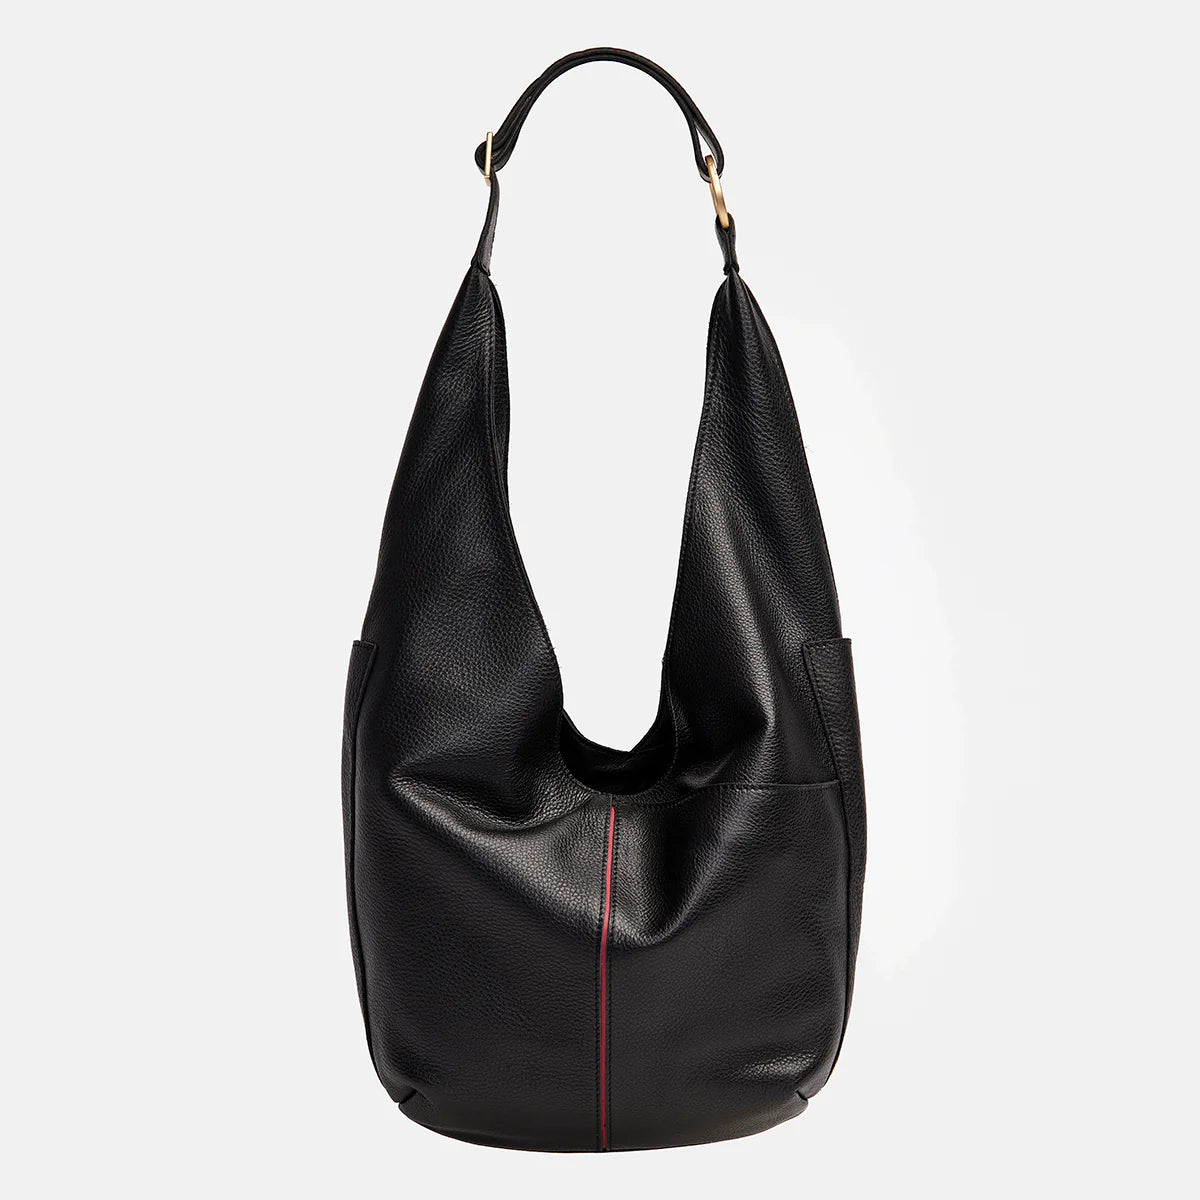 Red Leather Bag Soft Leather Bag Leather Hobo Bag MEDIUM 